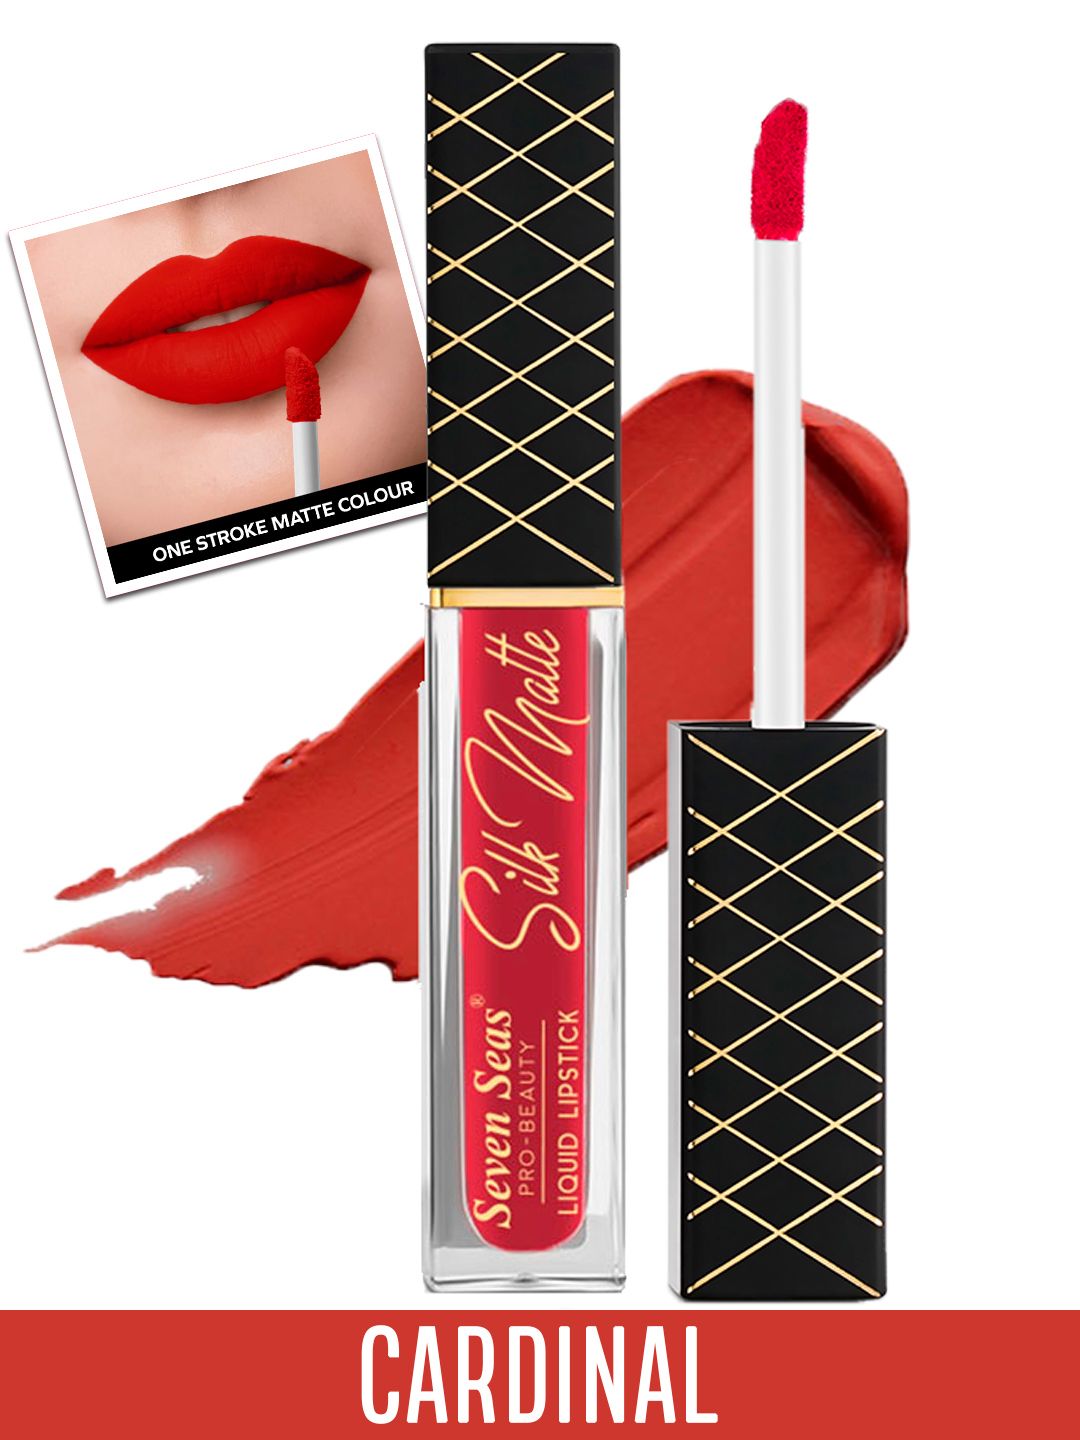 Seven Seas Silk Matte Liquid Lipstick 8g - Cardinal Price in India